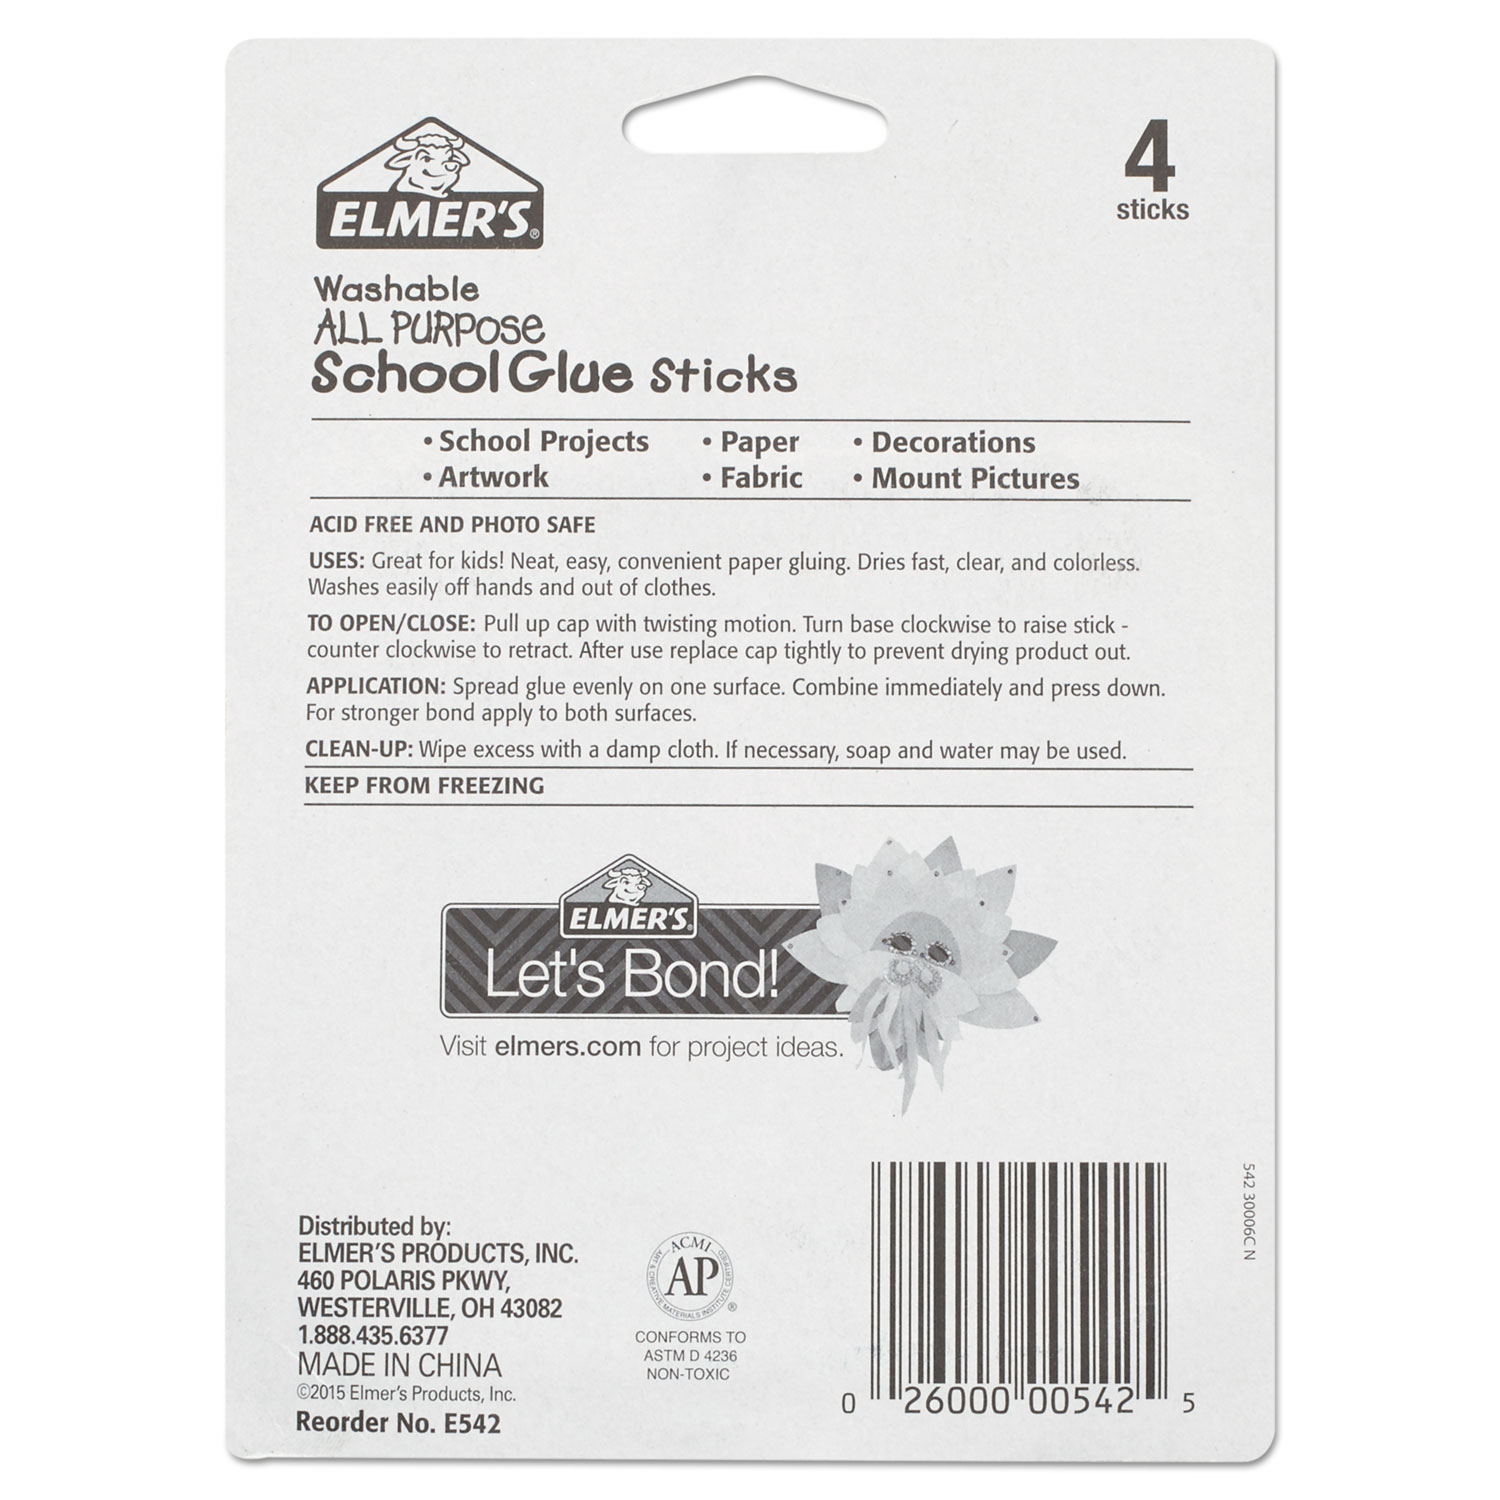 Elmer's Glue Stick Classroom Pack, Clear - 30 count, 0.24 oz sticks